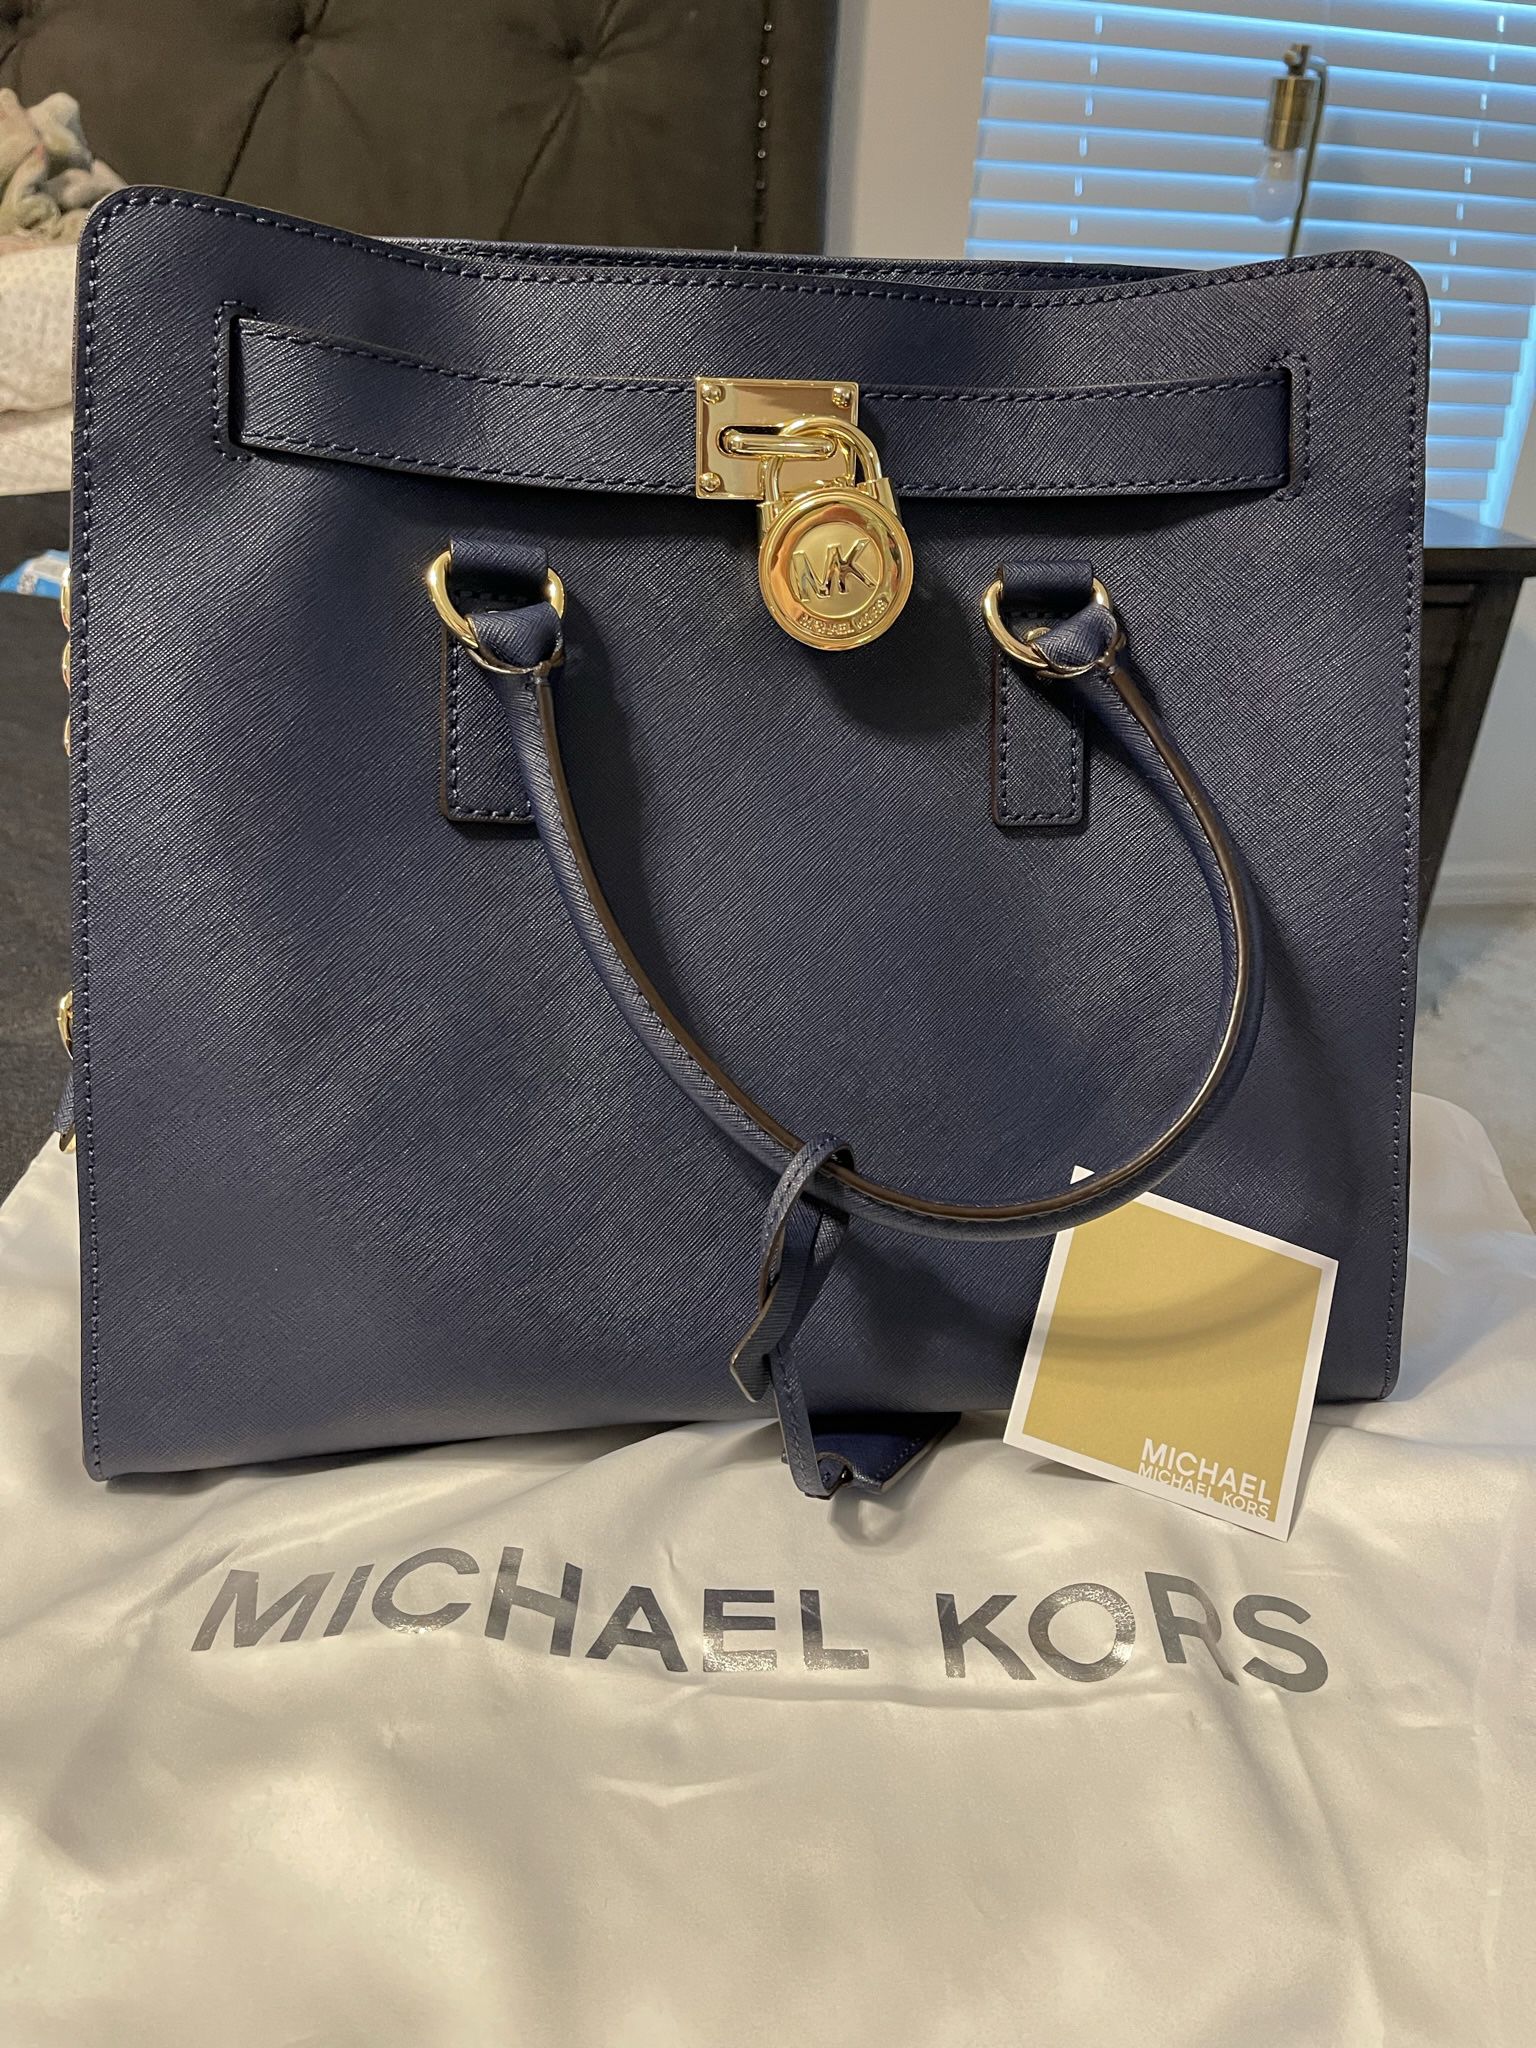 Michael Kors Hamilton Bag for Sale in Winter Haven, FL - OfferUp